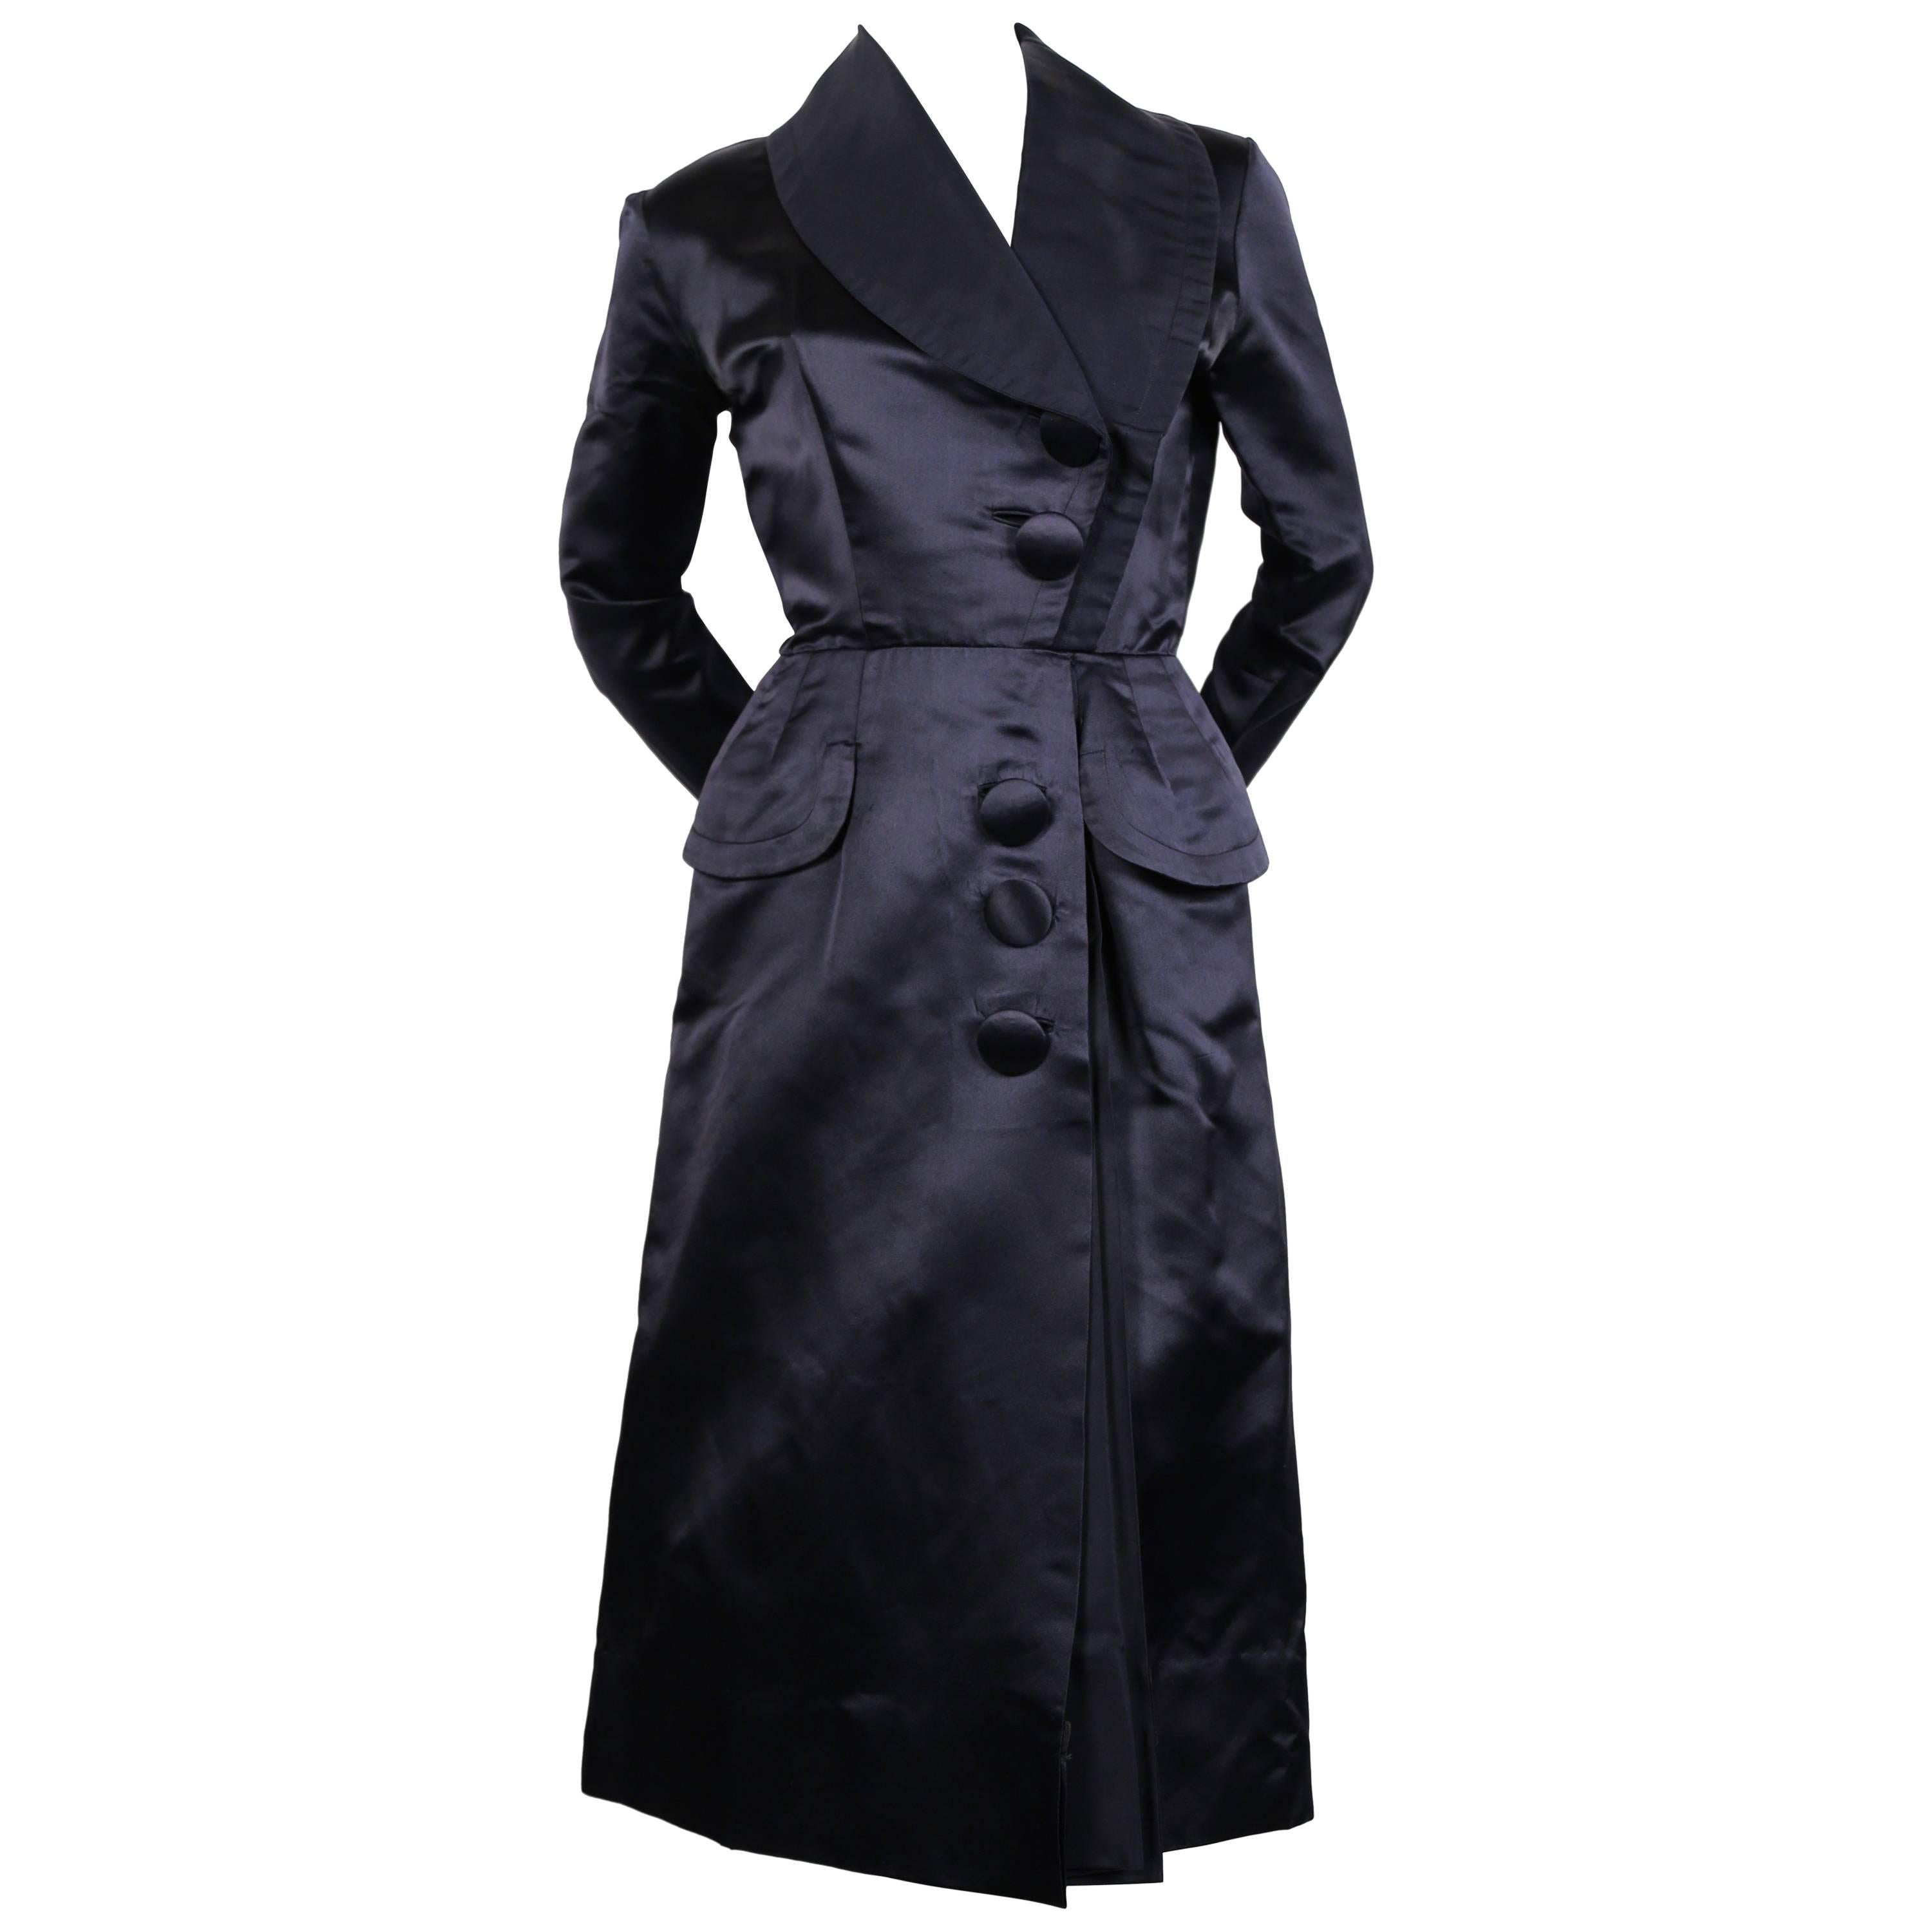 Jacques Fath navy blue satin coat dress, 1940s 